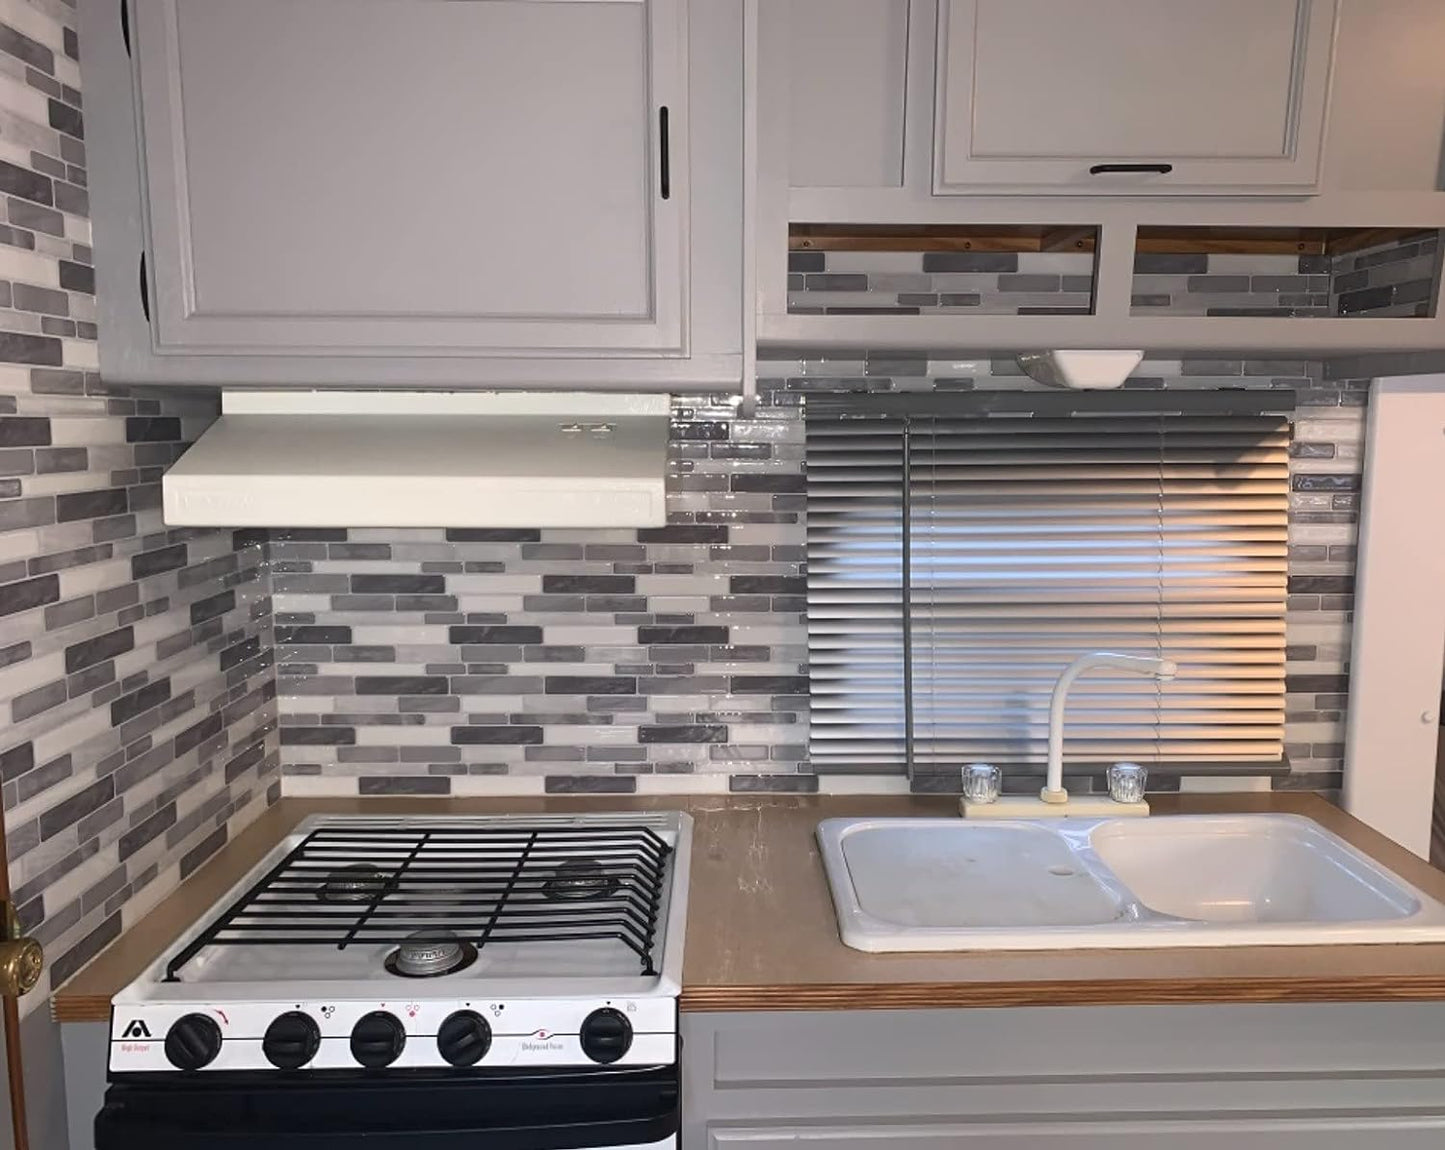 Art3d 10-Sheet Self Adhesive Backsplash Tiles for Kitchen Bathroom, 12 in. x 12in. Grey Marble Design (A17012P10)